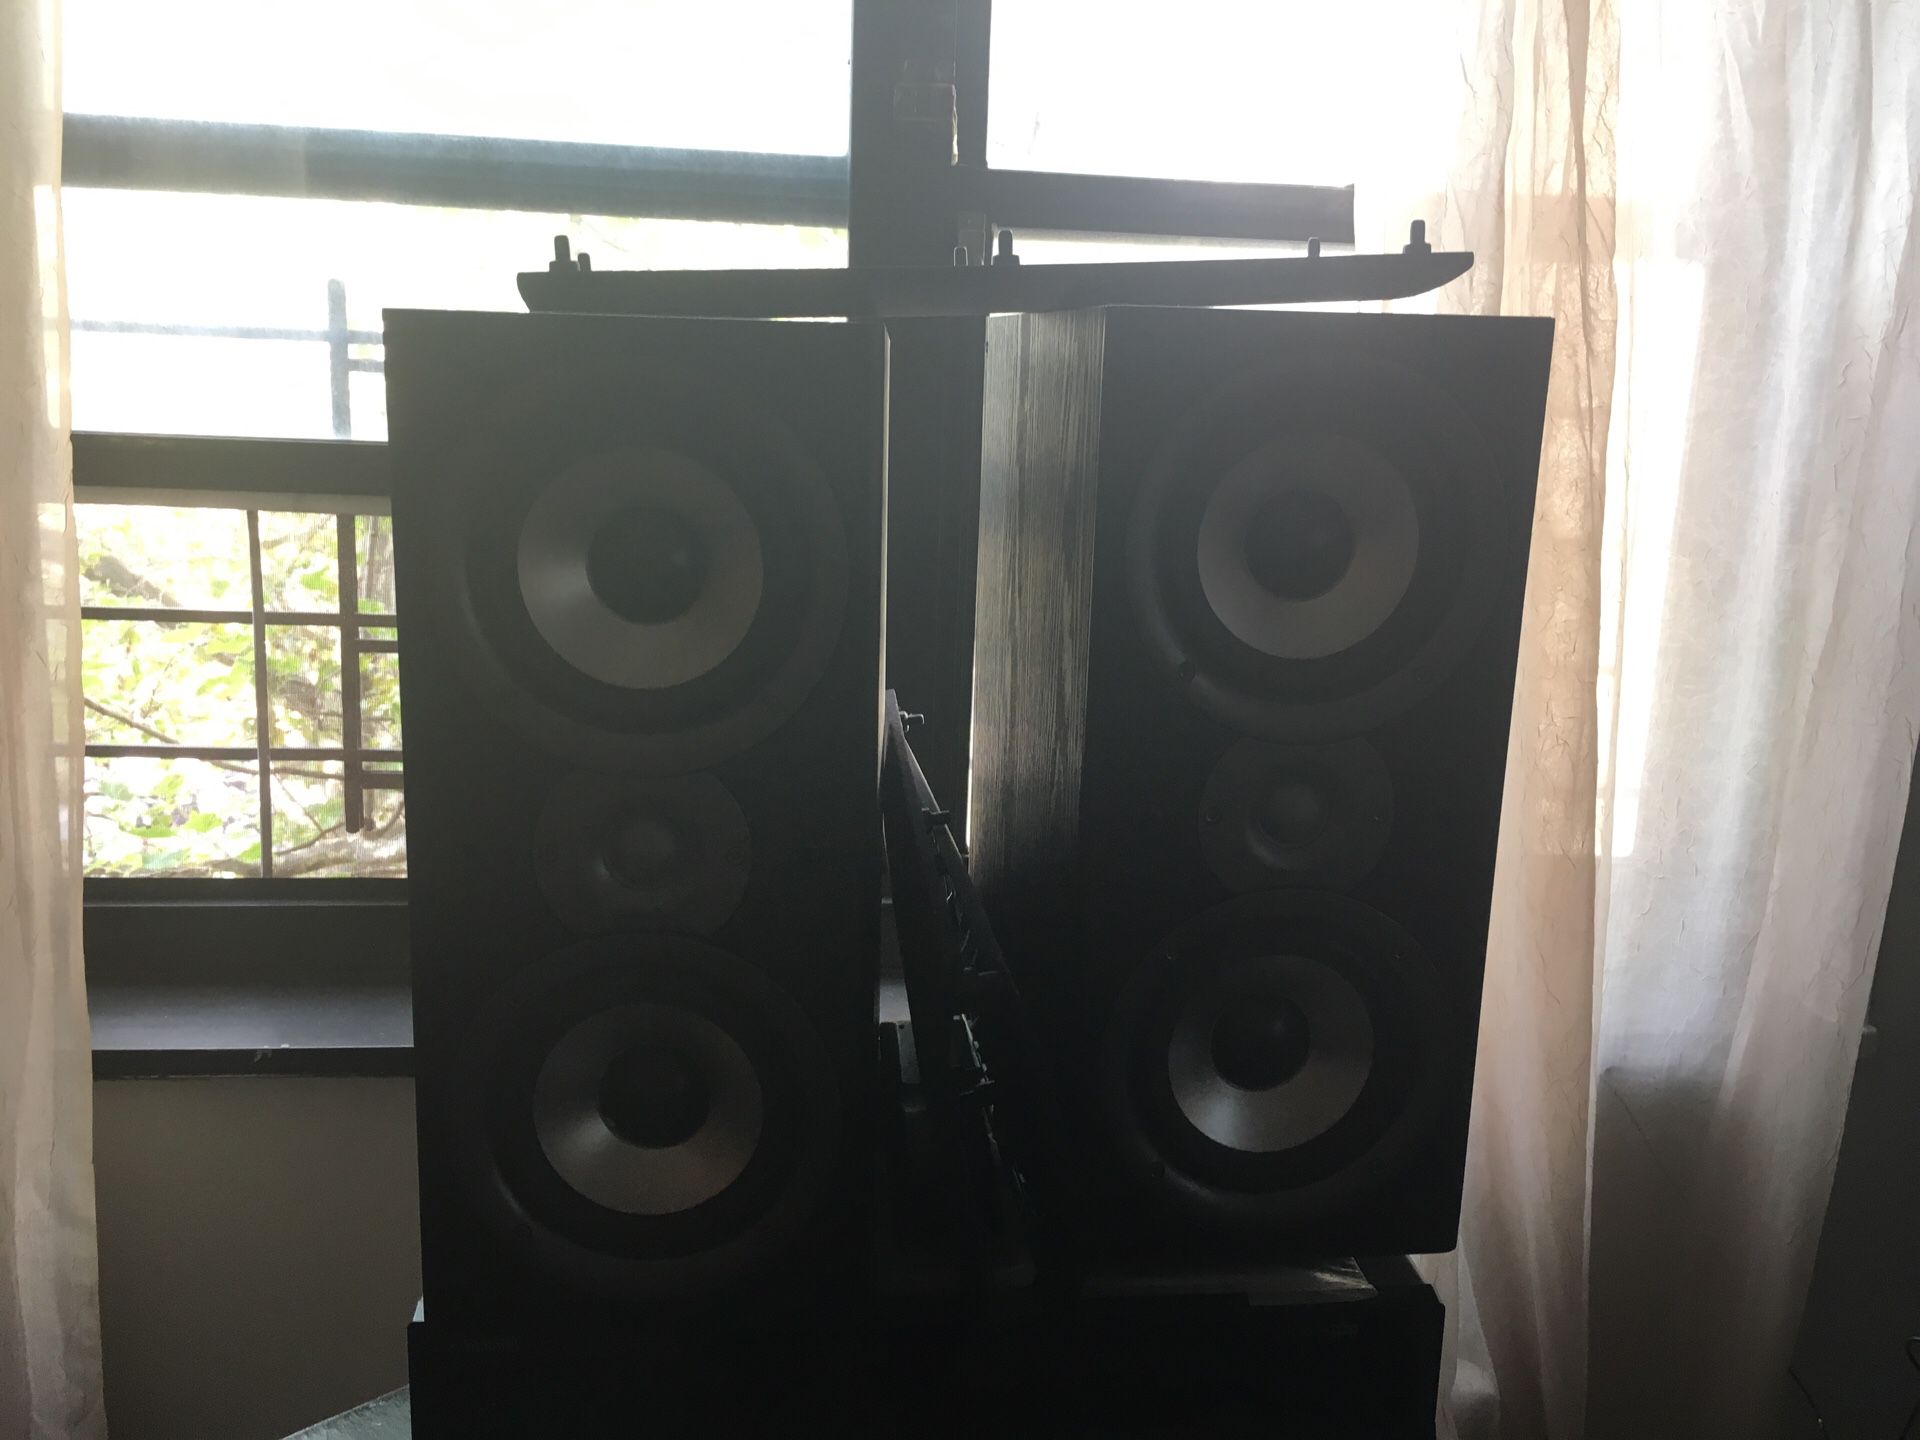 3 POLK AUDIO speakers for sale .